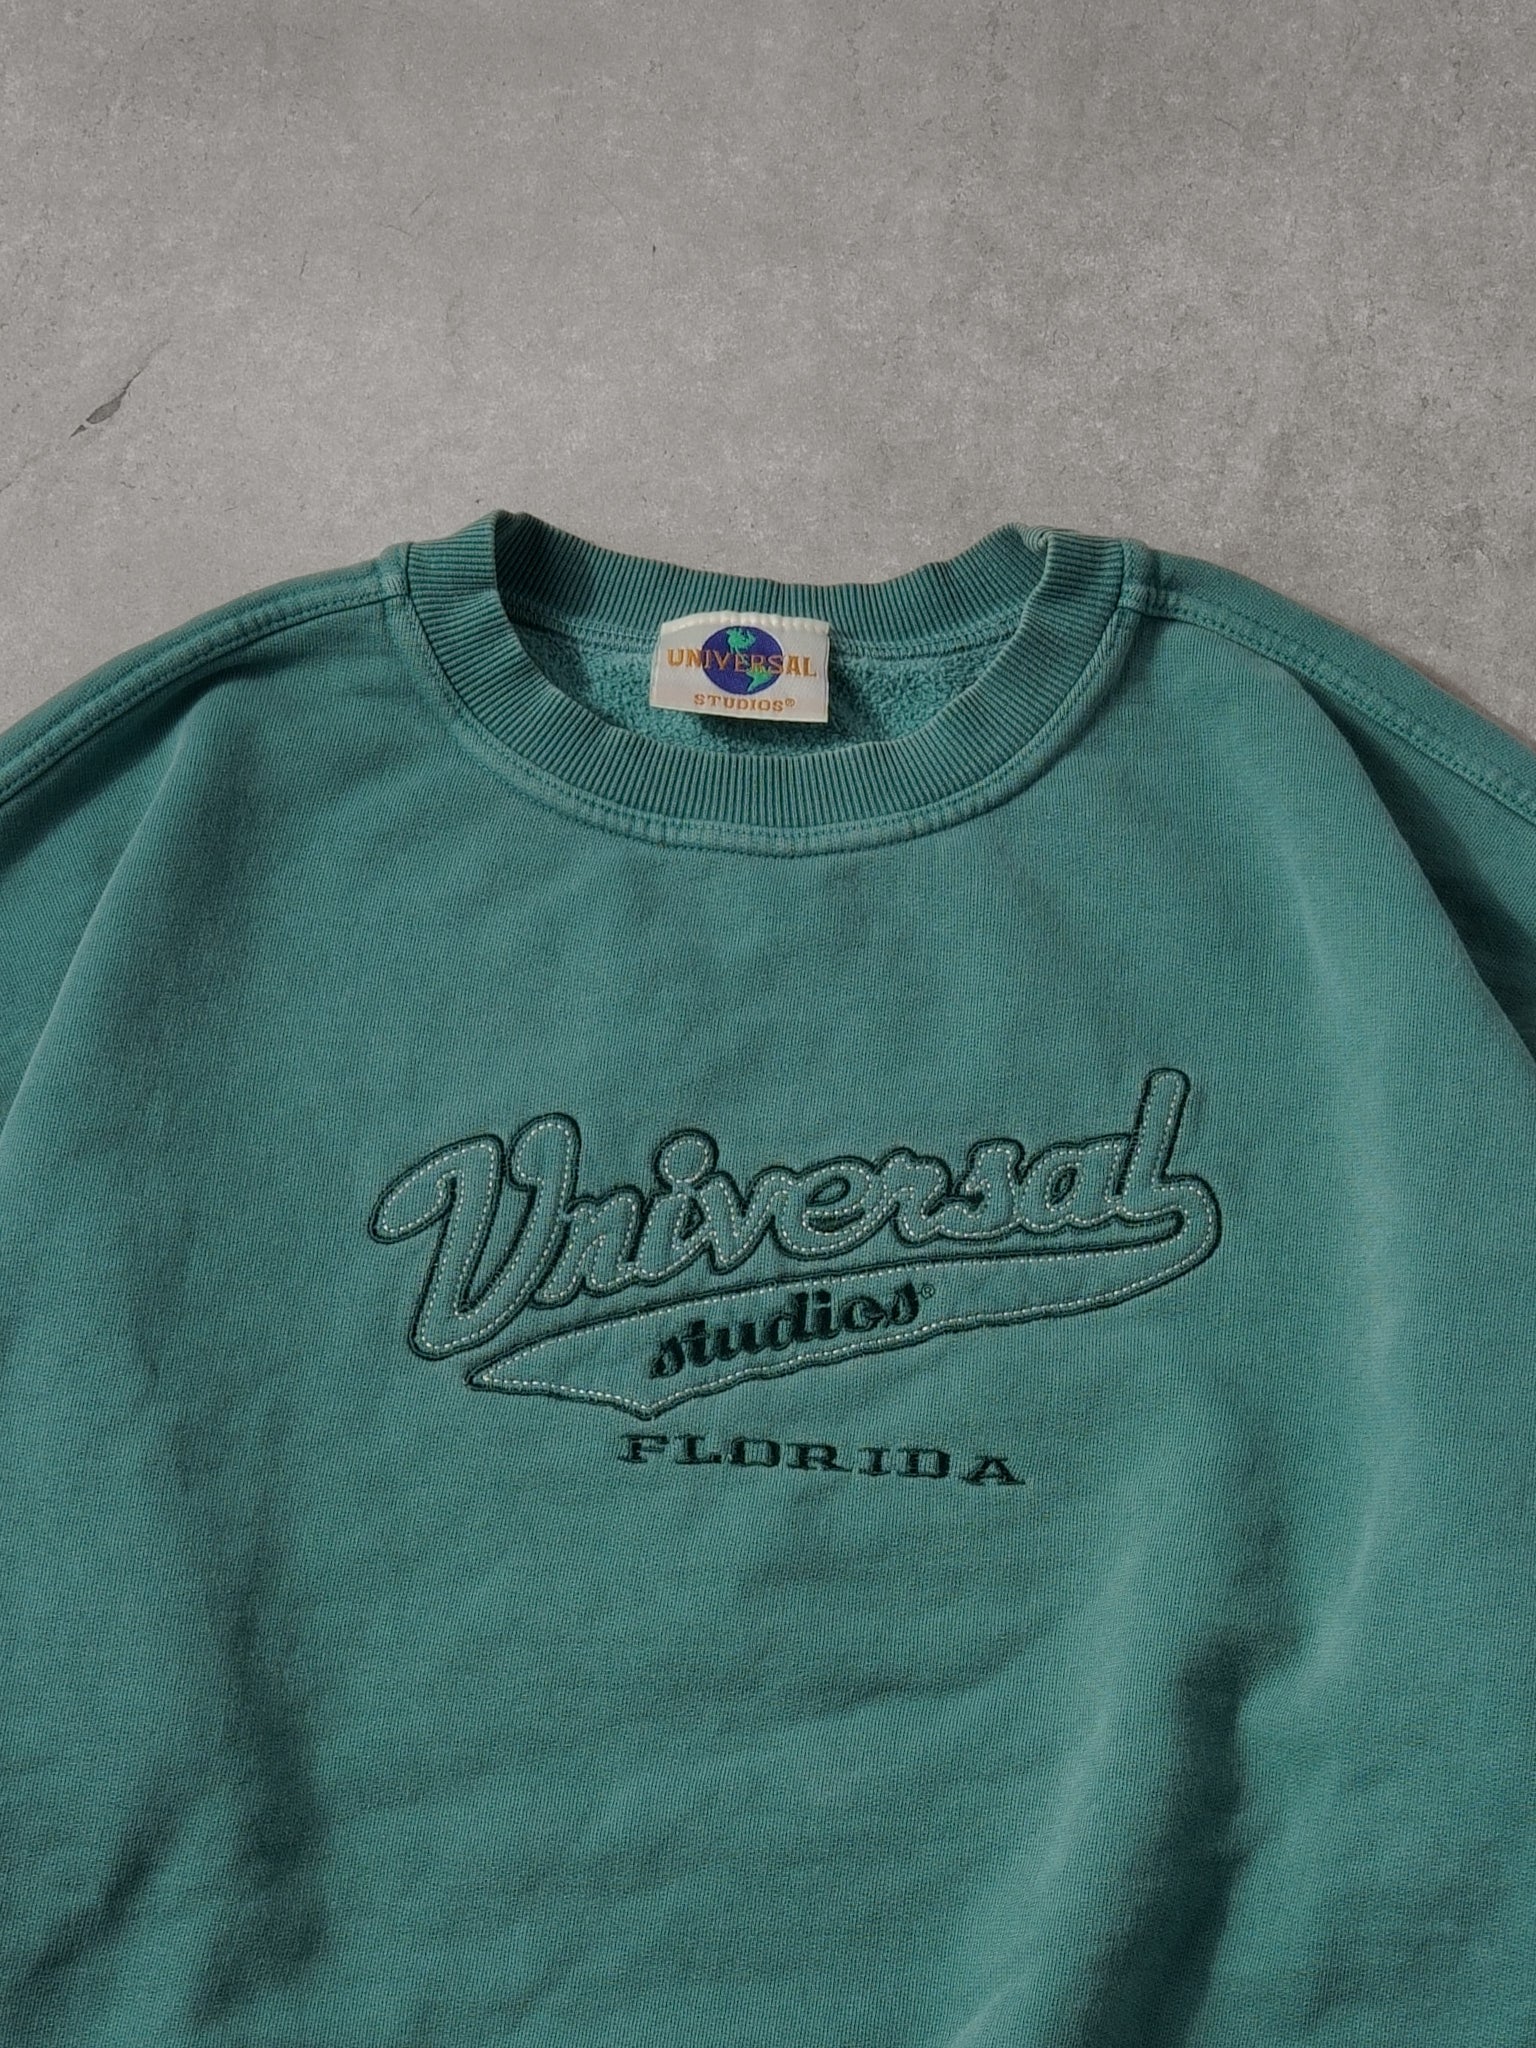 Vintage 90s Washed Oak Green Universal Studios Flordia Crewneck (XL)